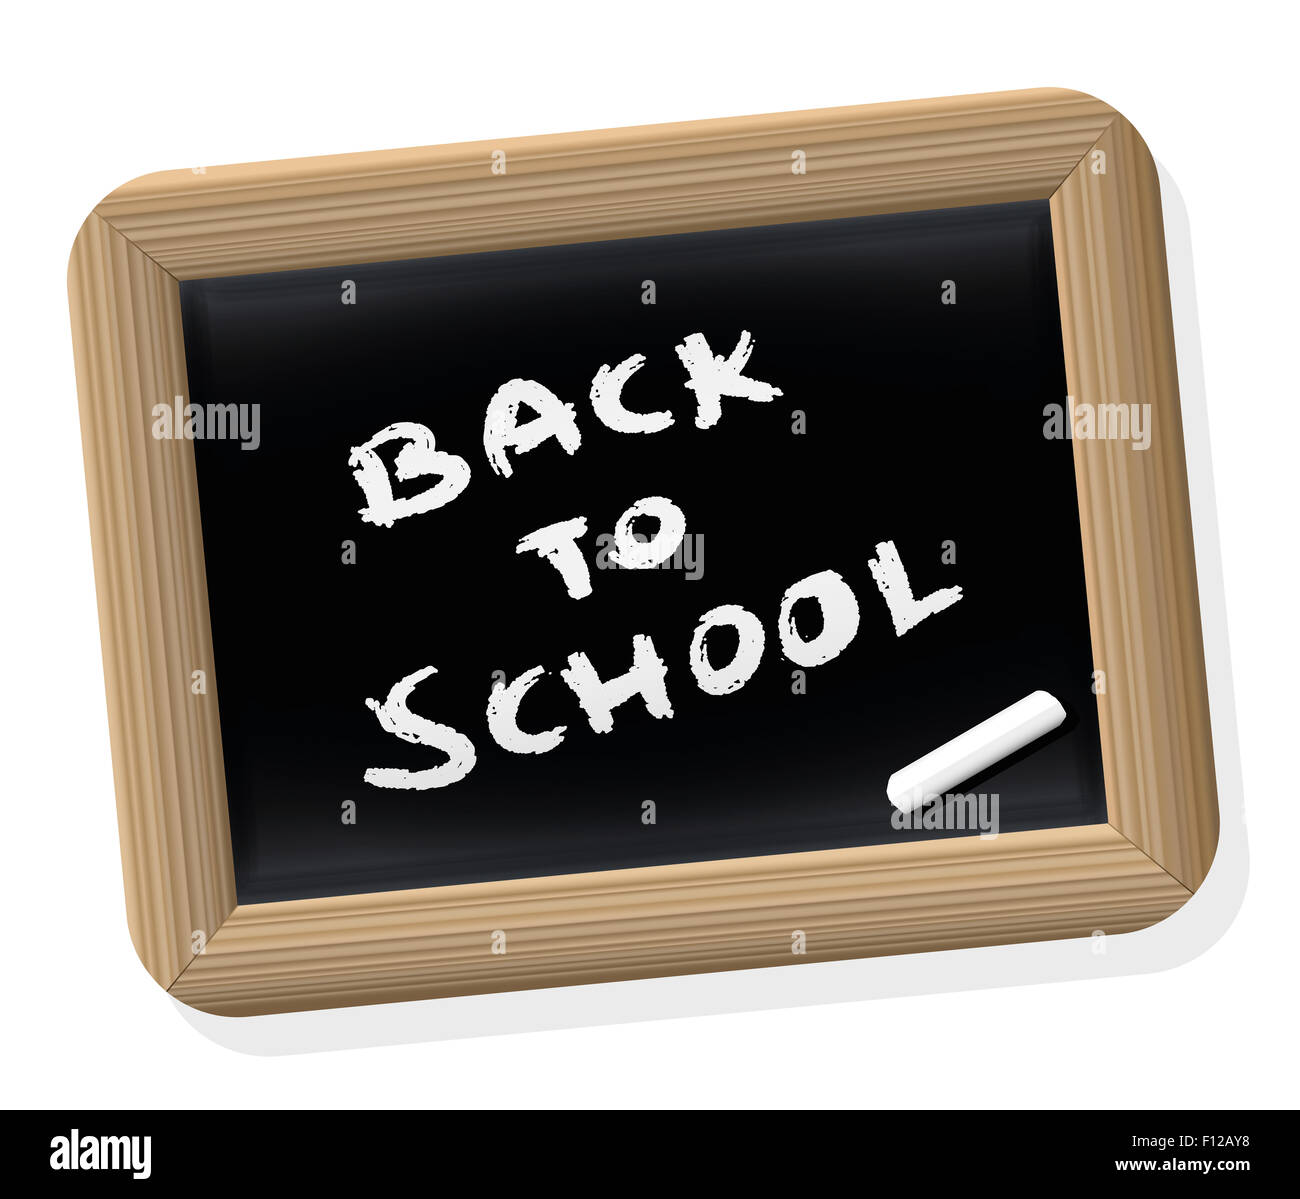 BACK TO SCHOOL - written on a retro styled slate tablet with blackboard chalk. Stock Photo